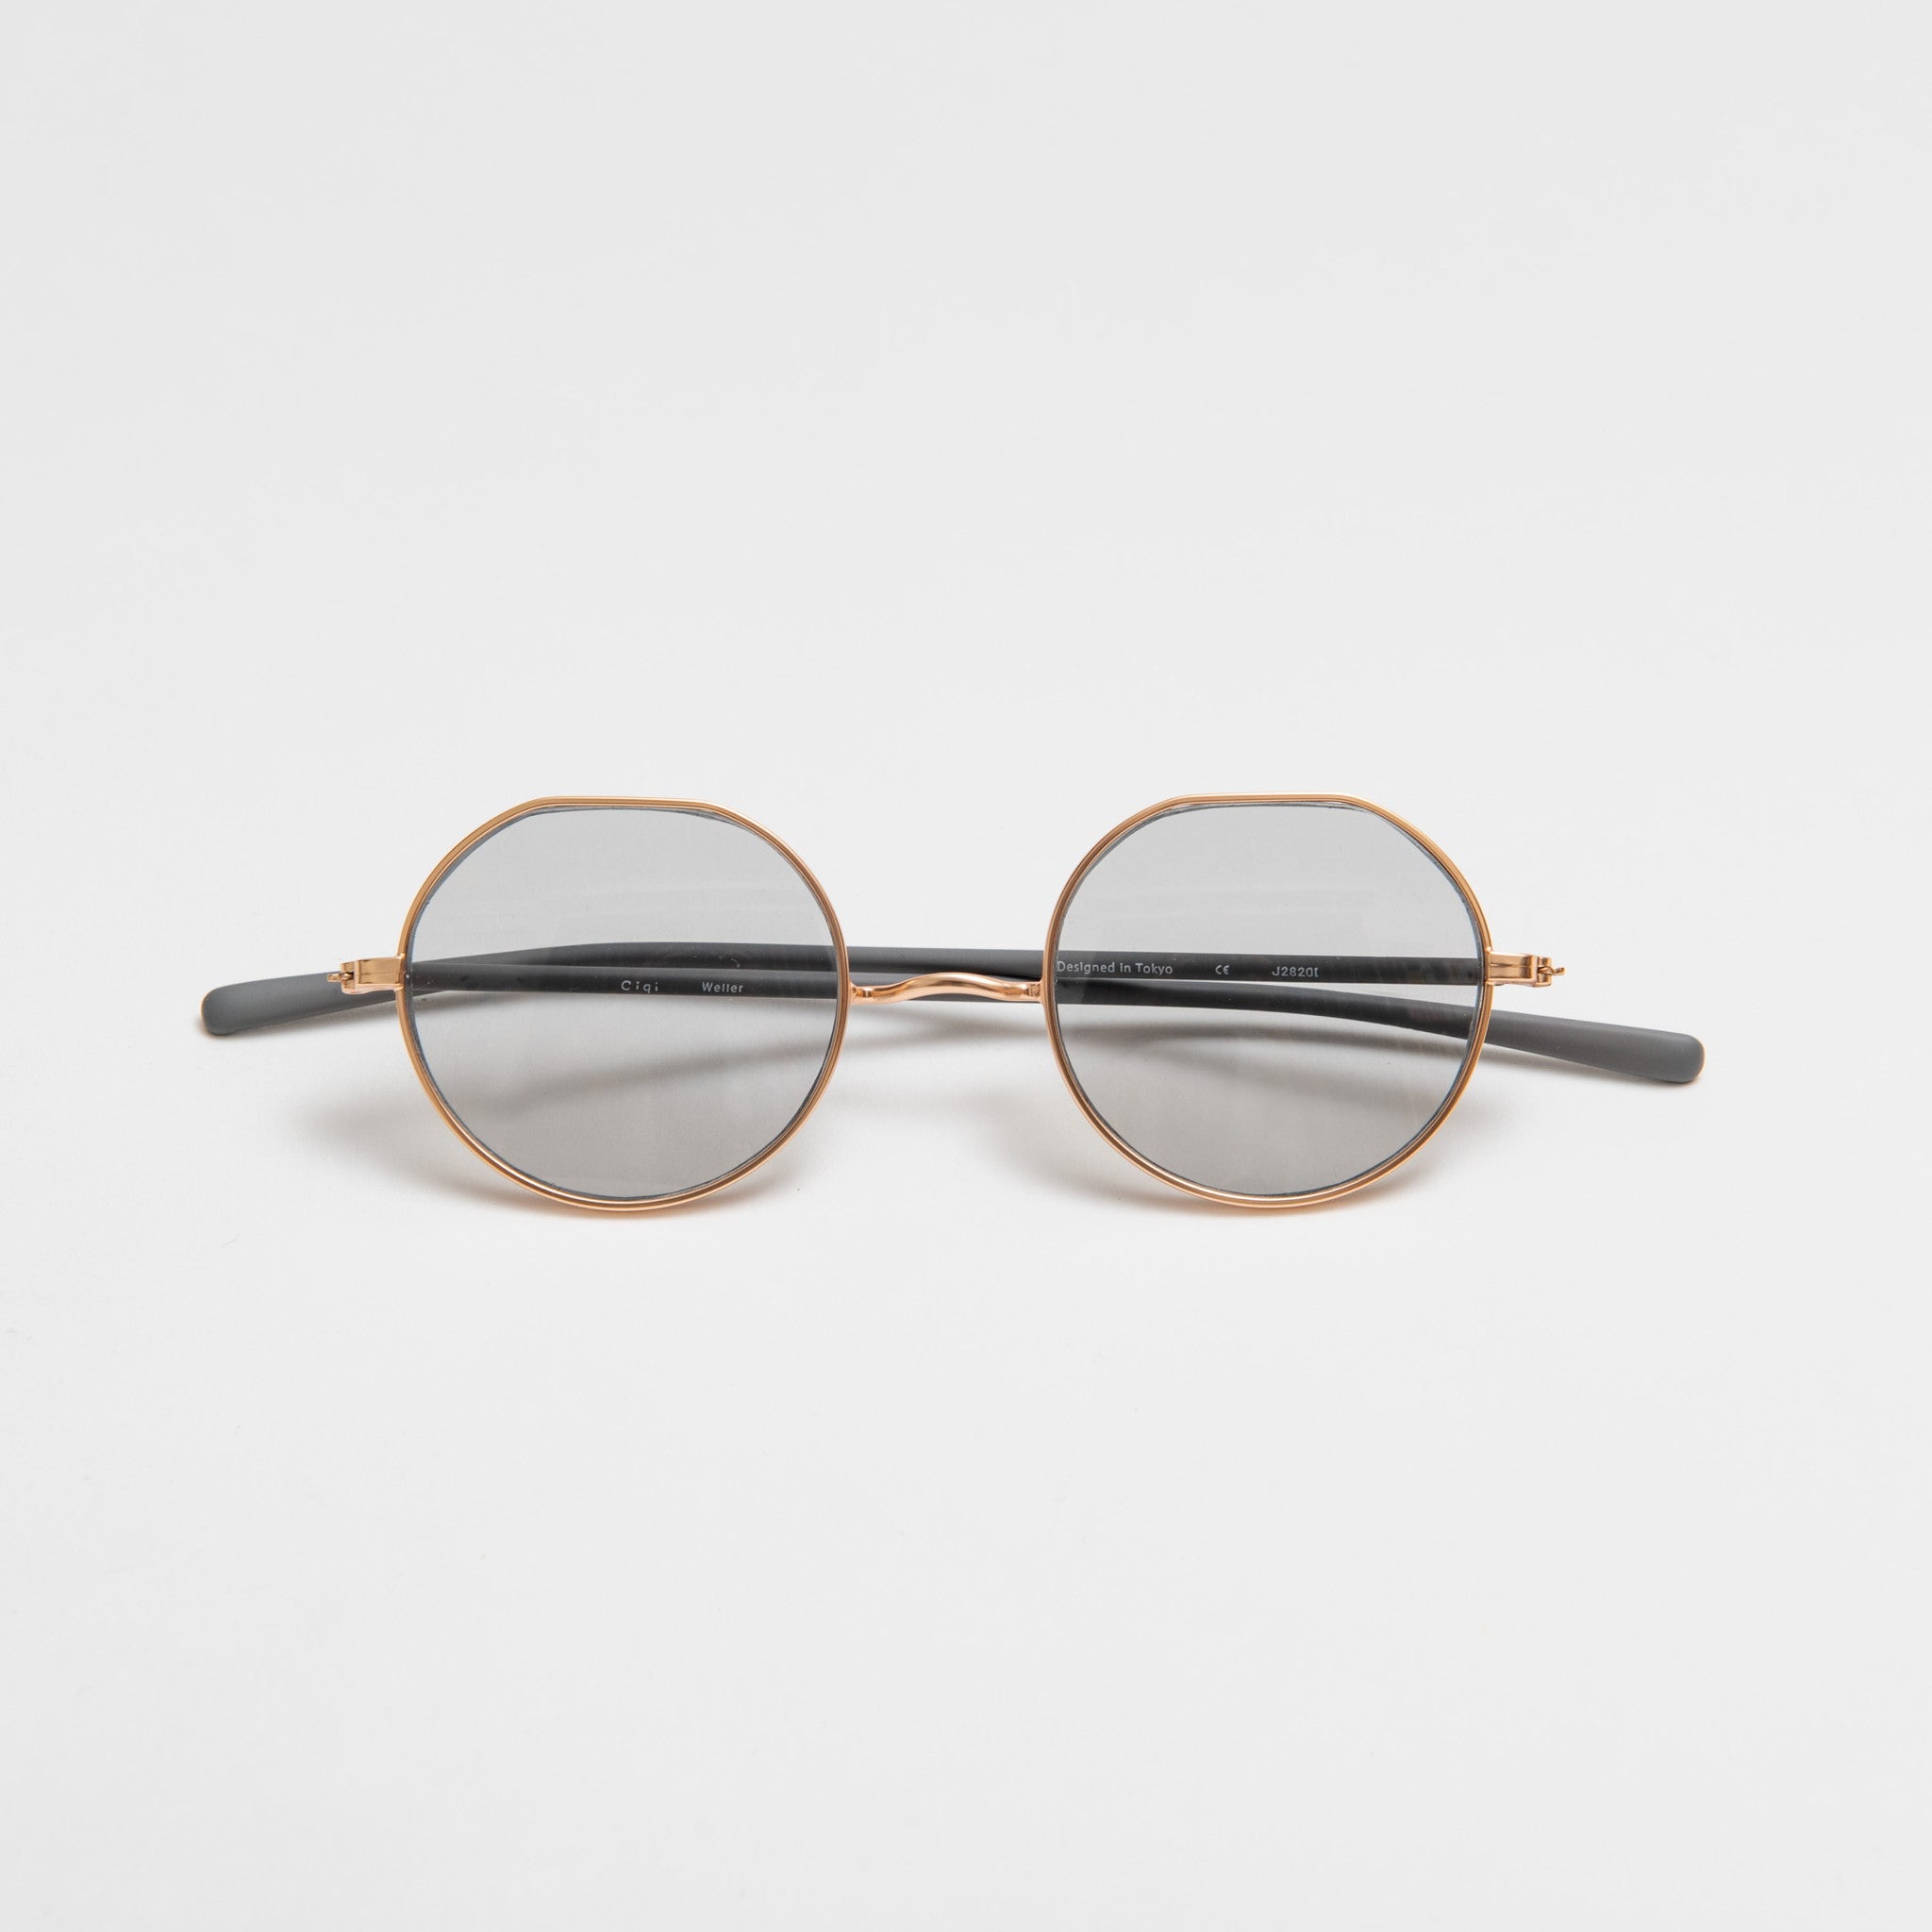 【Ciqi】WELLER サングラス Slate Gray Light Gray Lens sunglasses(ウェラー スレートグレー ライトグレーレンズ)